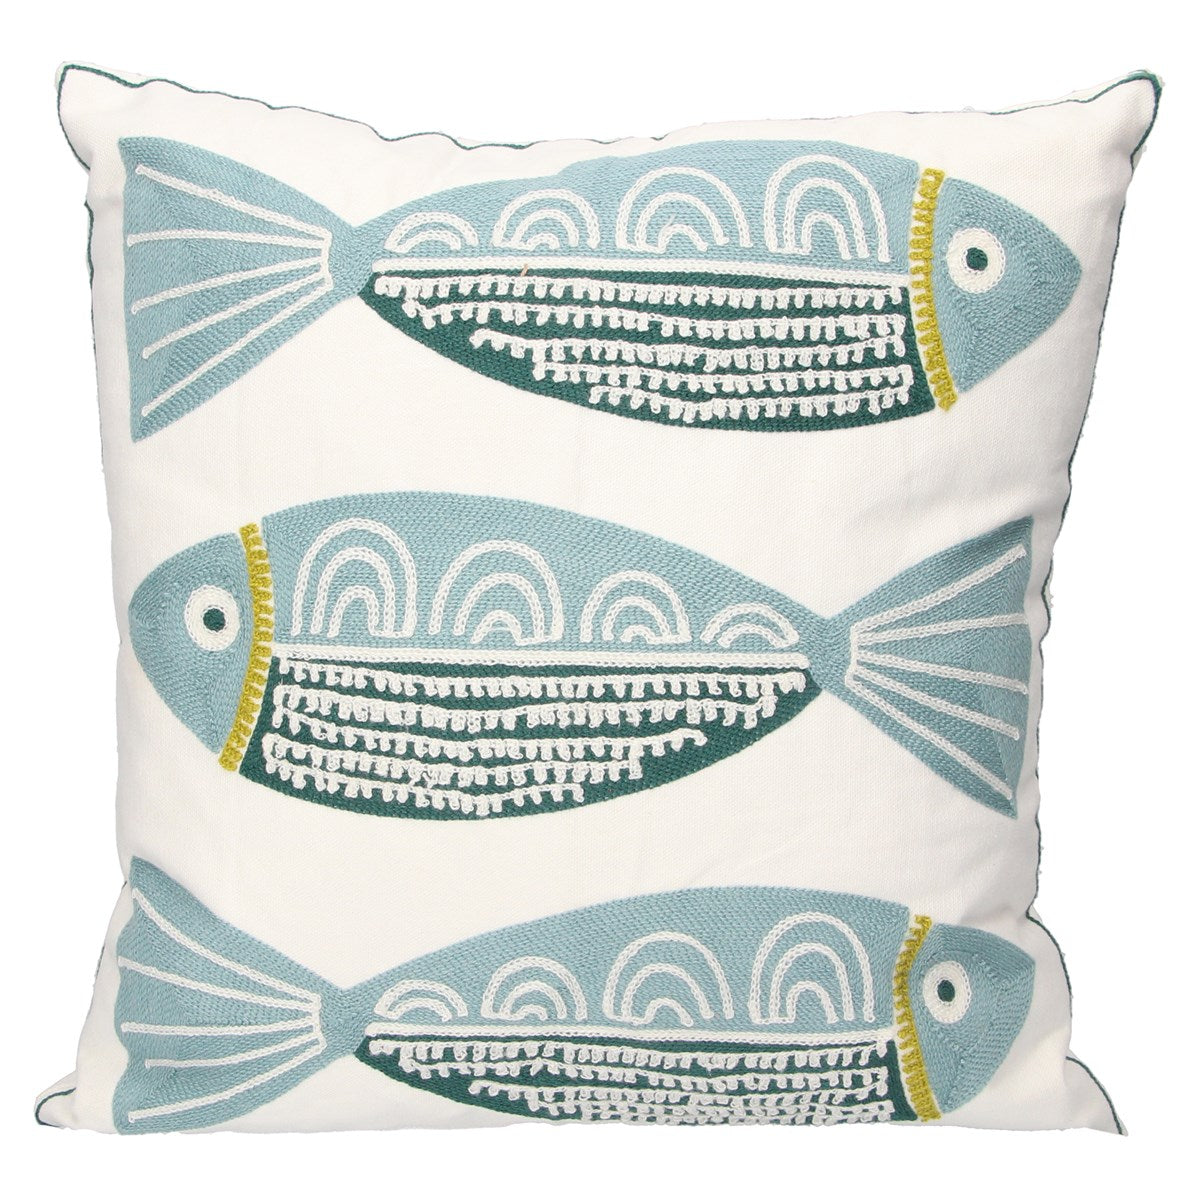 Crewel Work Fish Cushion